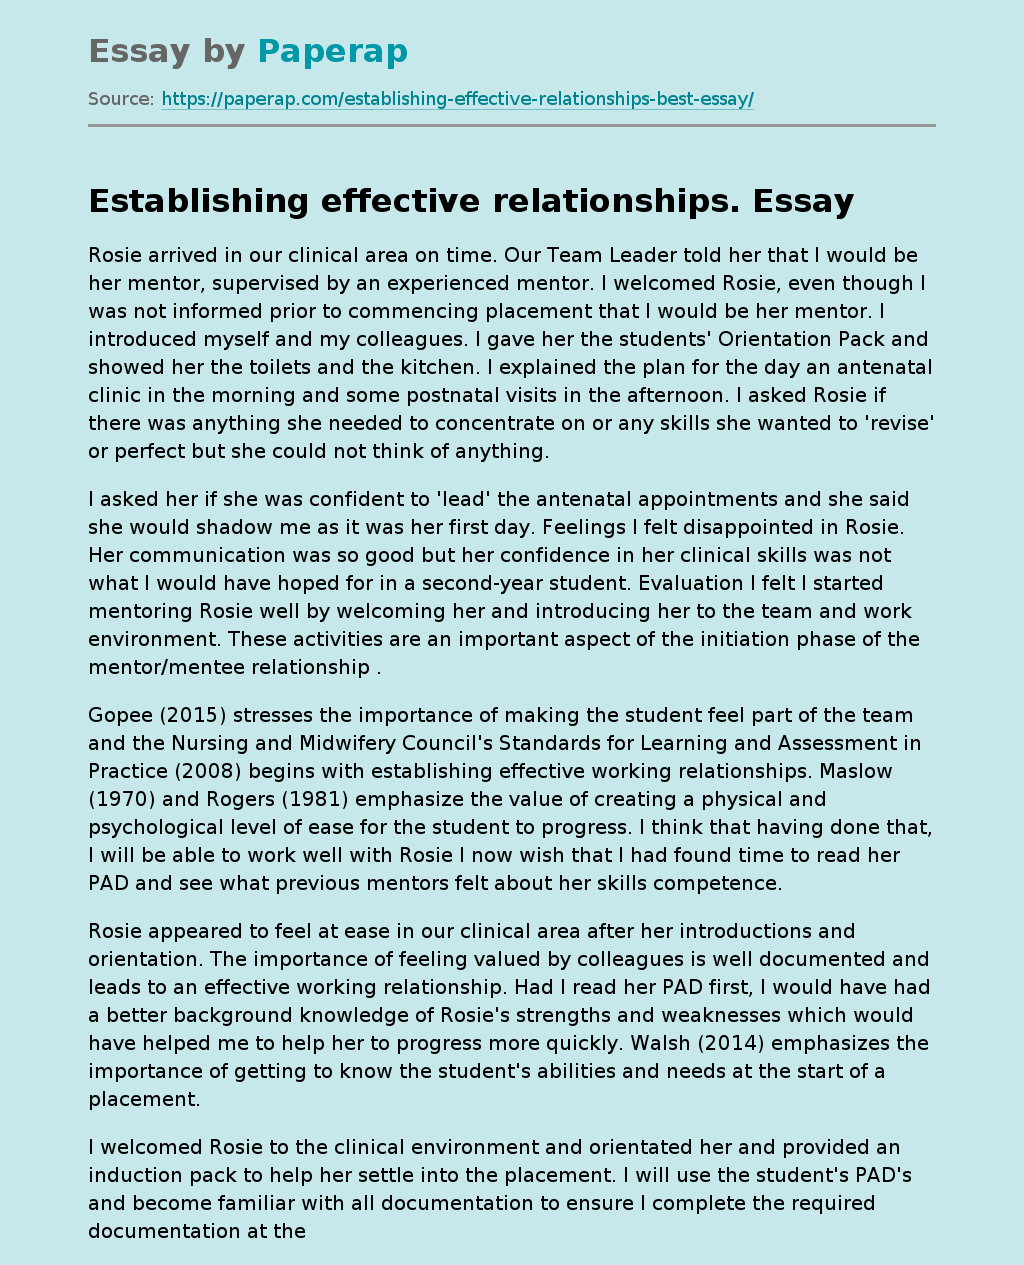 Establishing effective relationships.